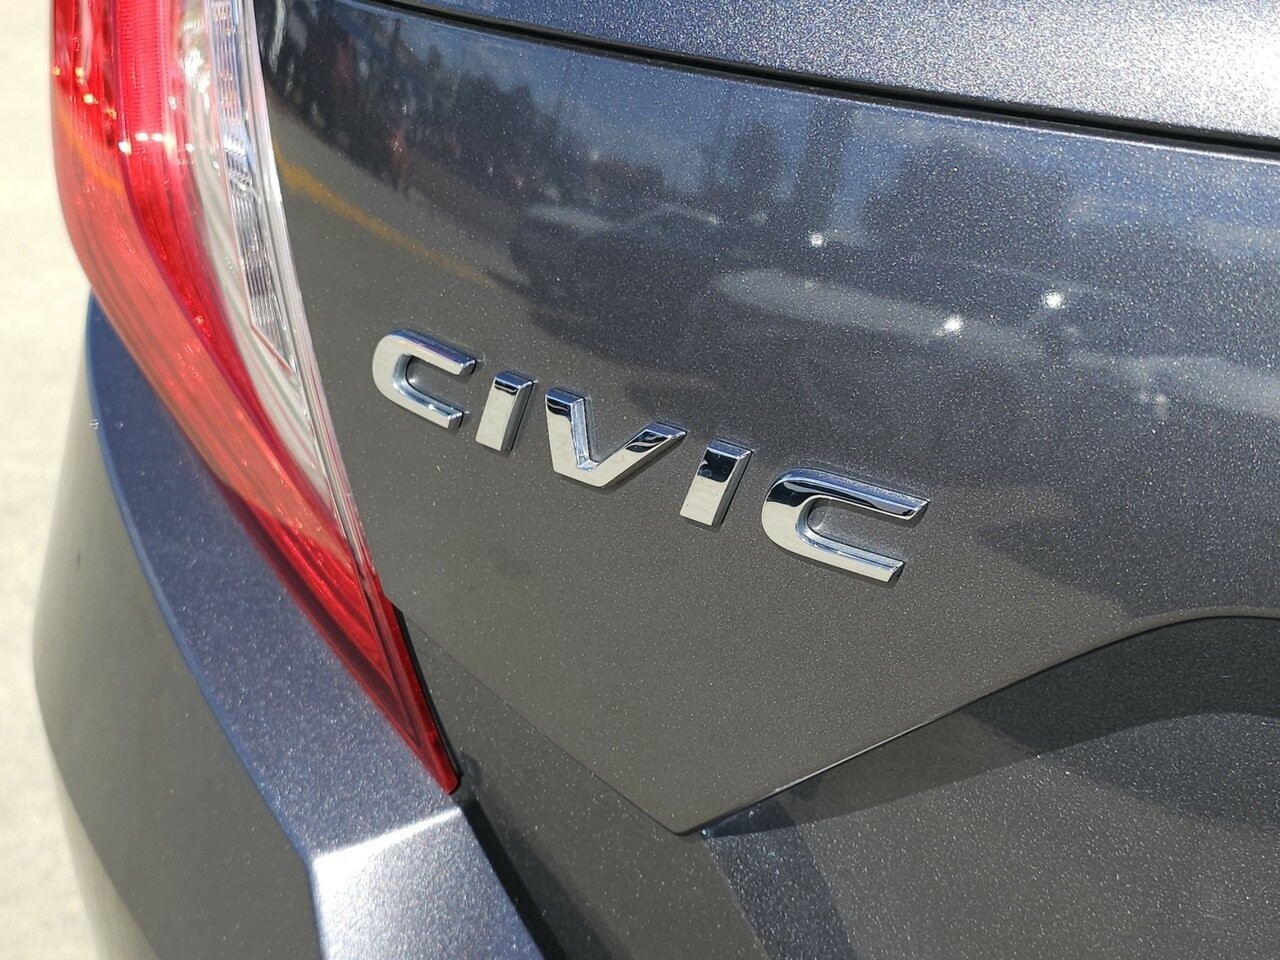 Honda Civic image 4